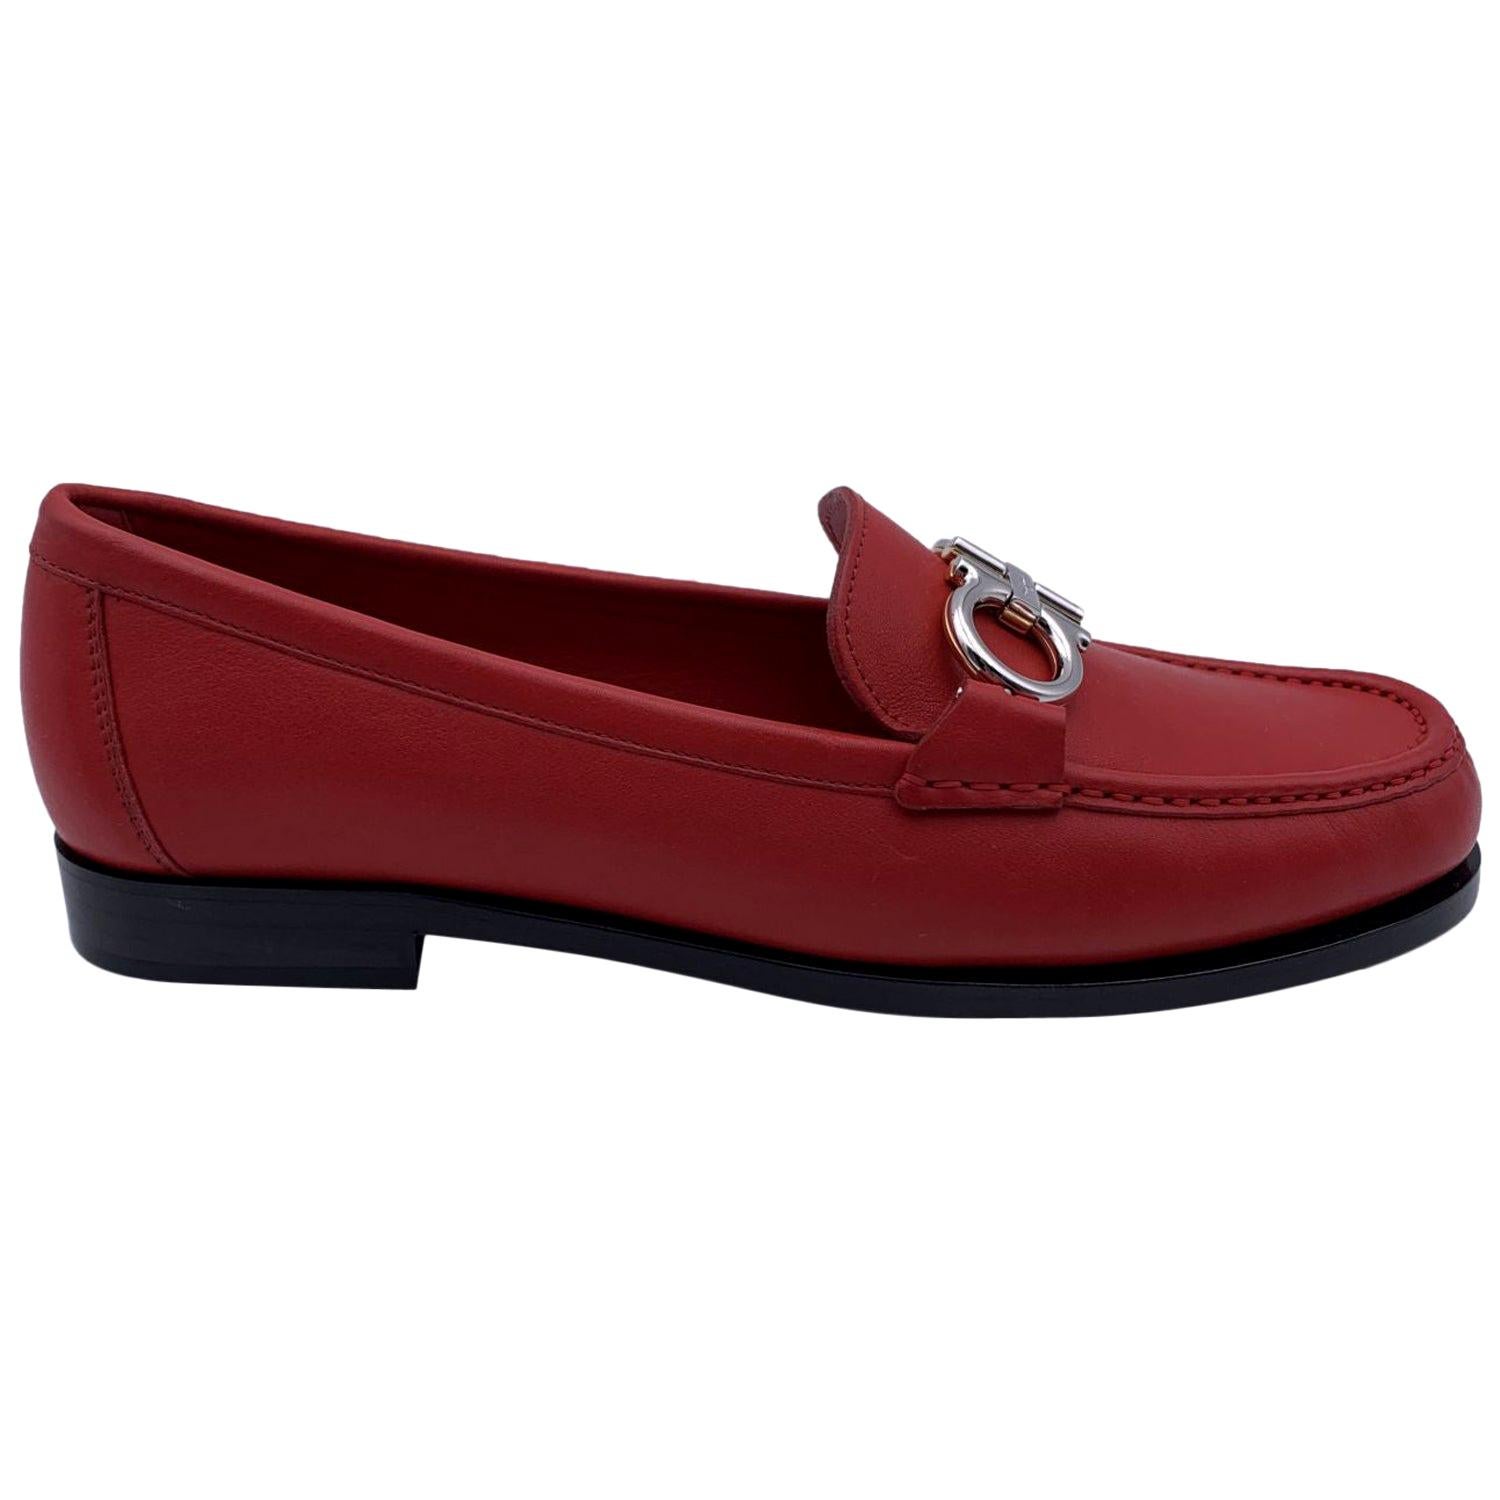 Salvatore Ferragamo Leather Rolo Loafers Moccassins Size 5.5C 36C